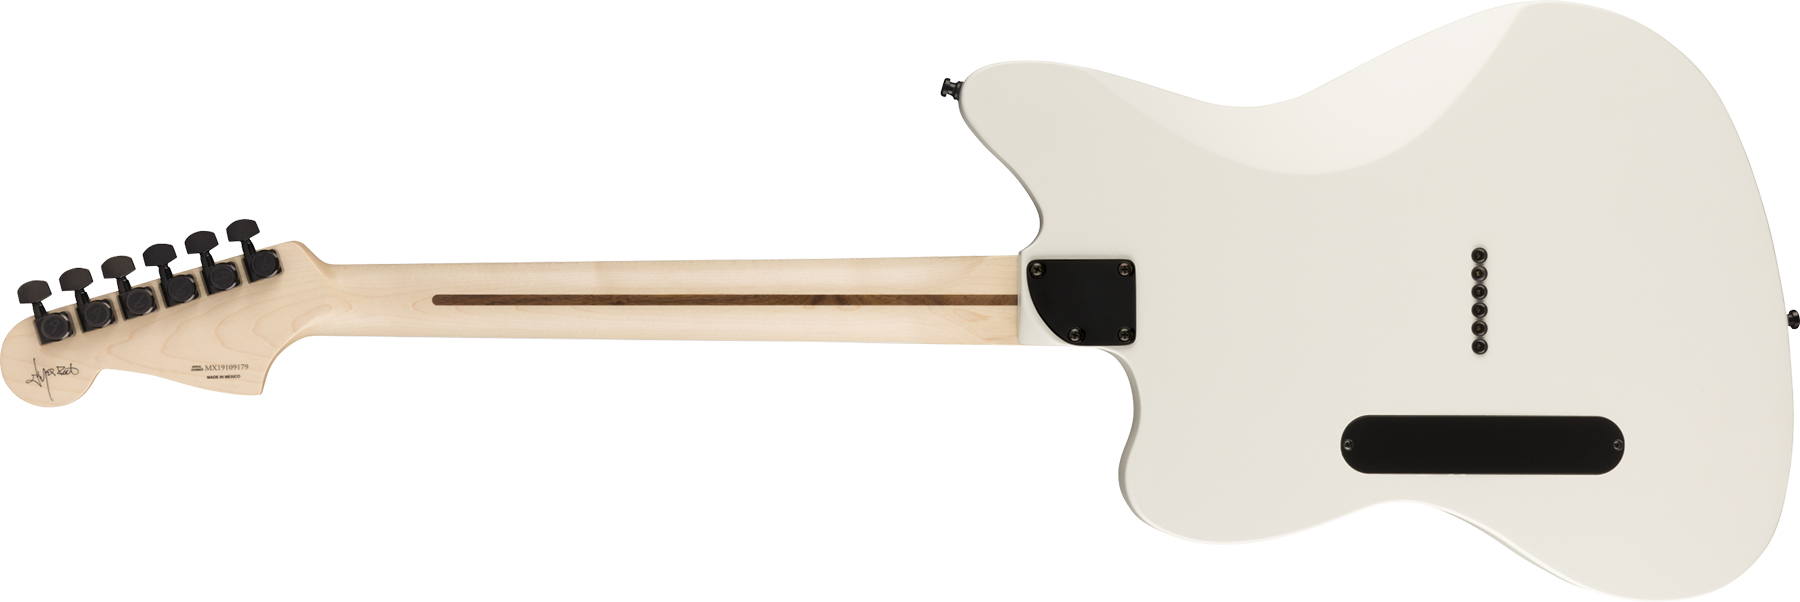 Fender Jim Root Jazzmaster V4 Mex Signature Hh Emg Ht Eb - Artic White - Retro rock electric guitar - Variation 1